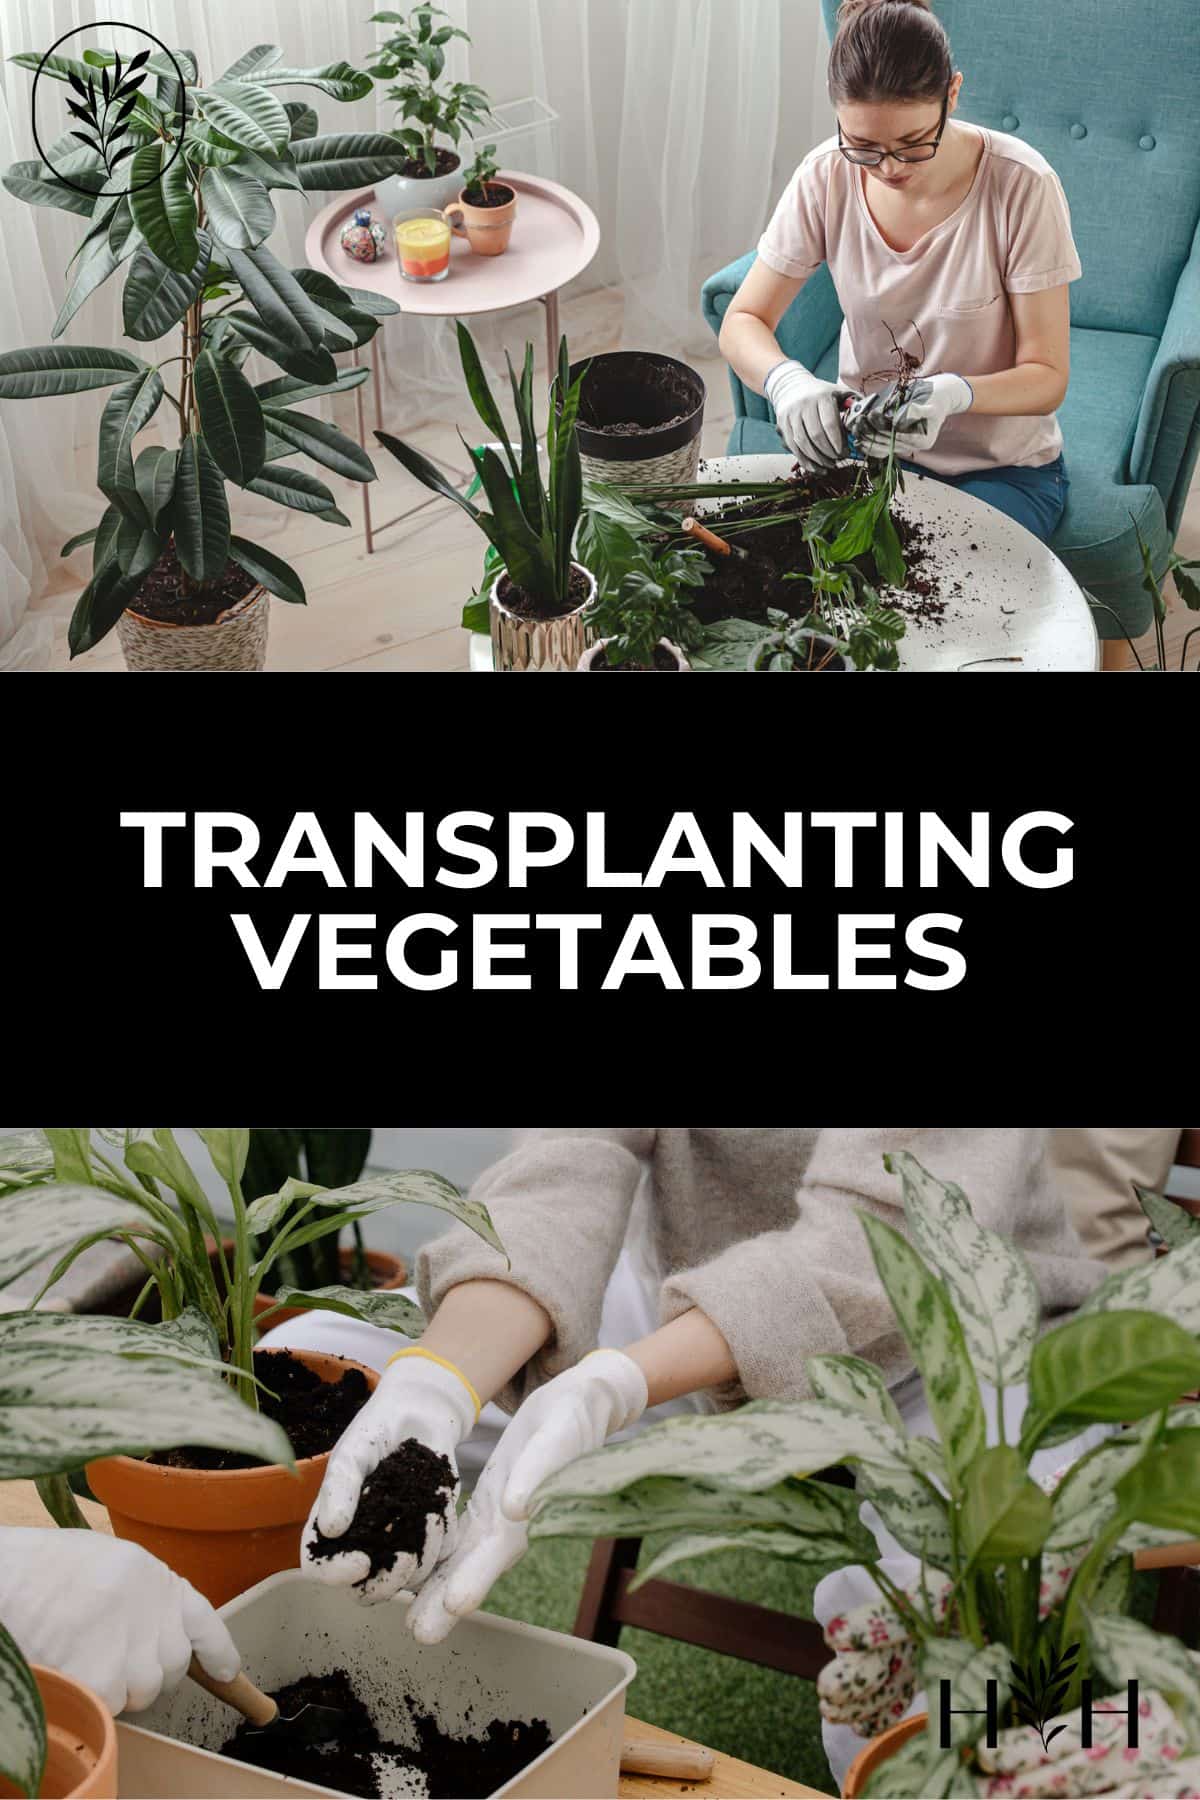 Transplanting vegetables via @home4theharvest